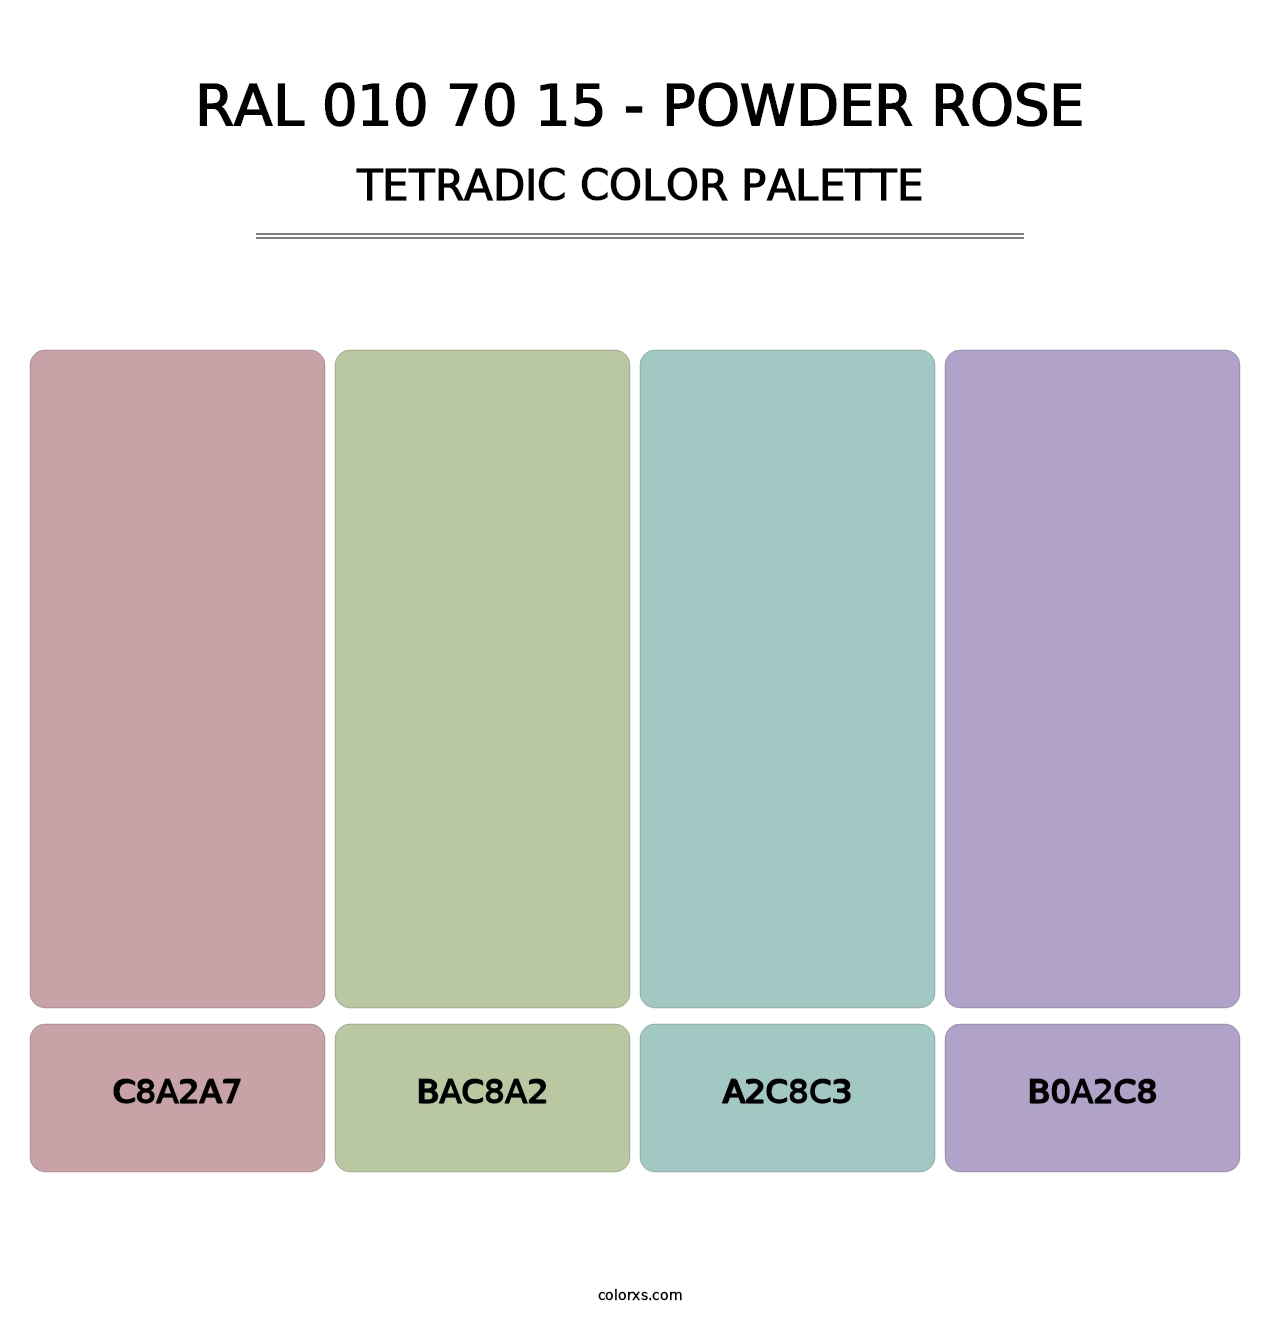 RAL 010 70 15 - Powder Rose - Tetradic Color Palette